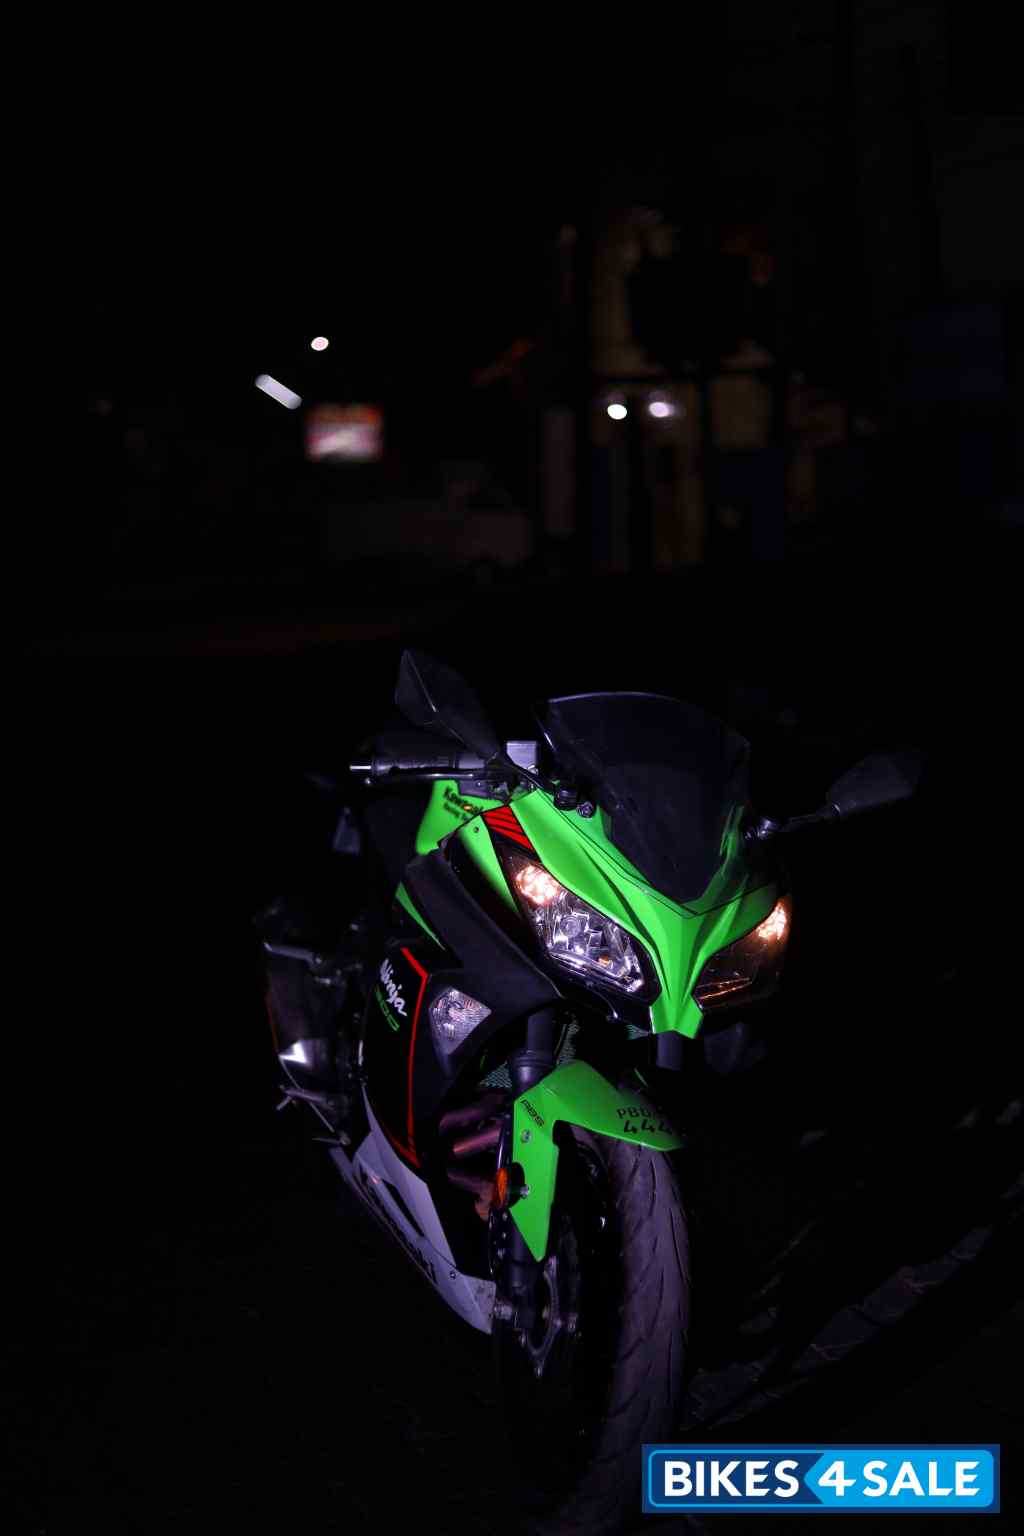 Lime Green Krt Edition Kawasaki Ninja 300 BS6